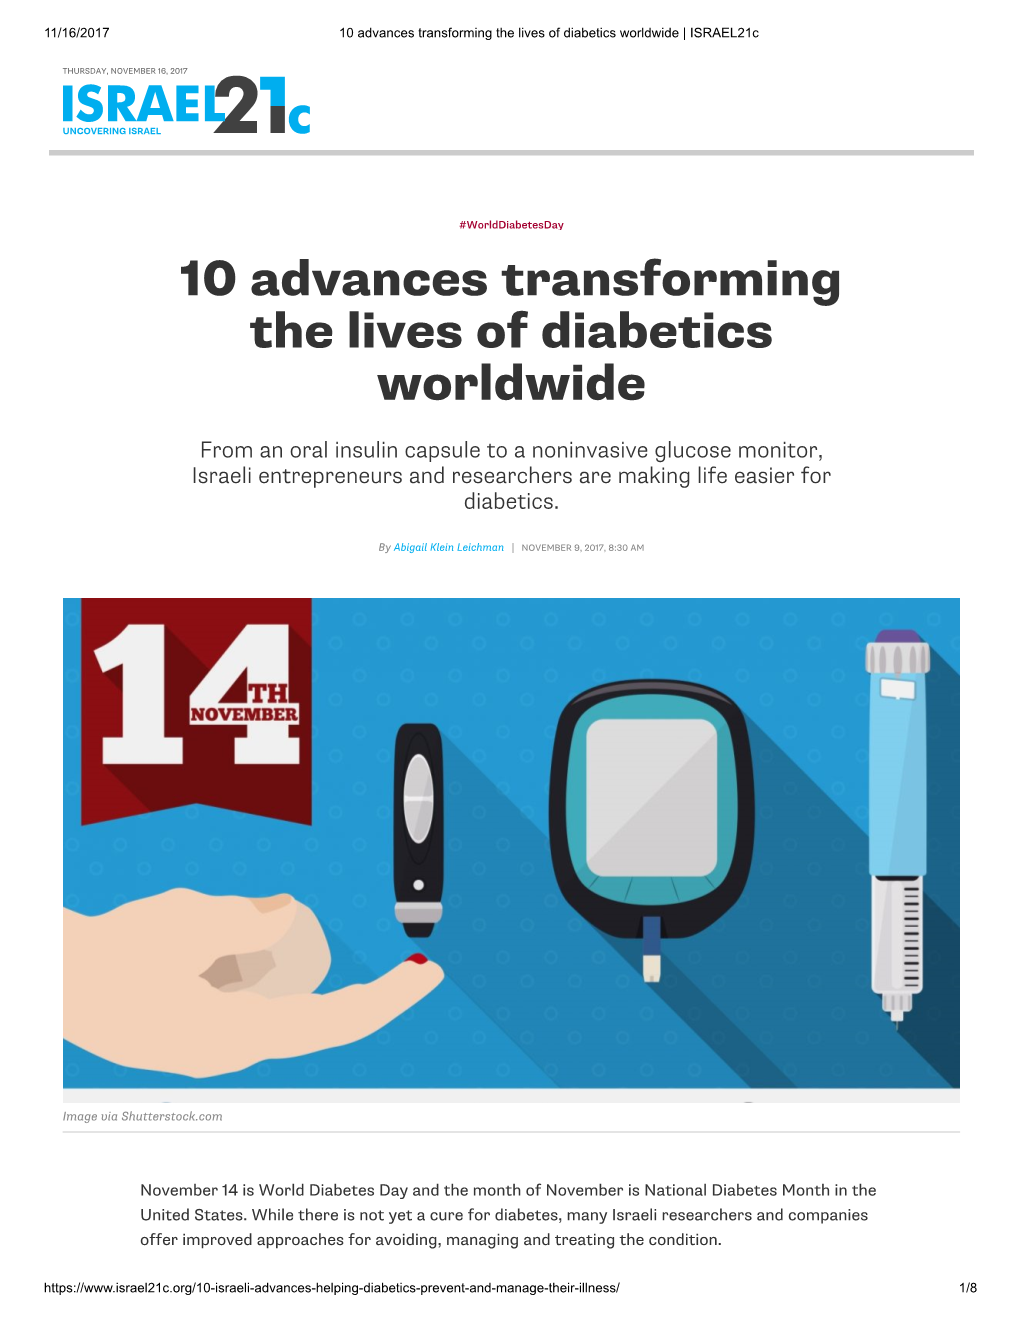 10 Advances Transforming the Lives of Diabetics Worldwide | Israel21c